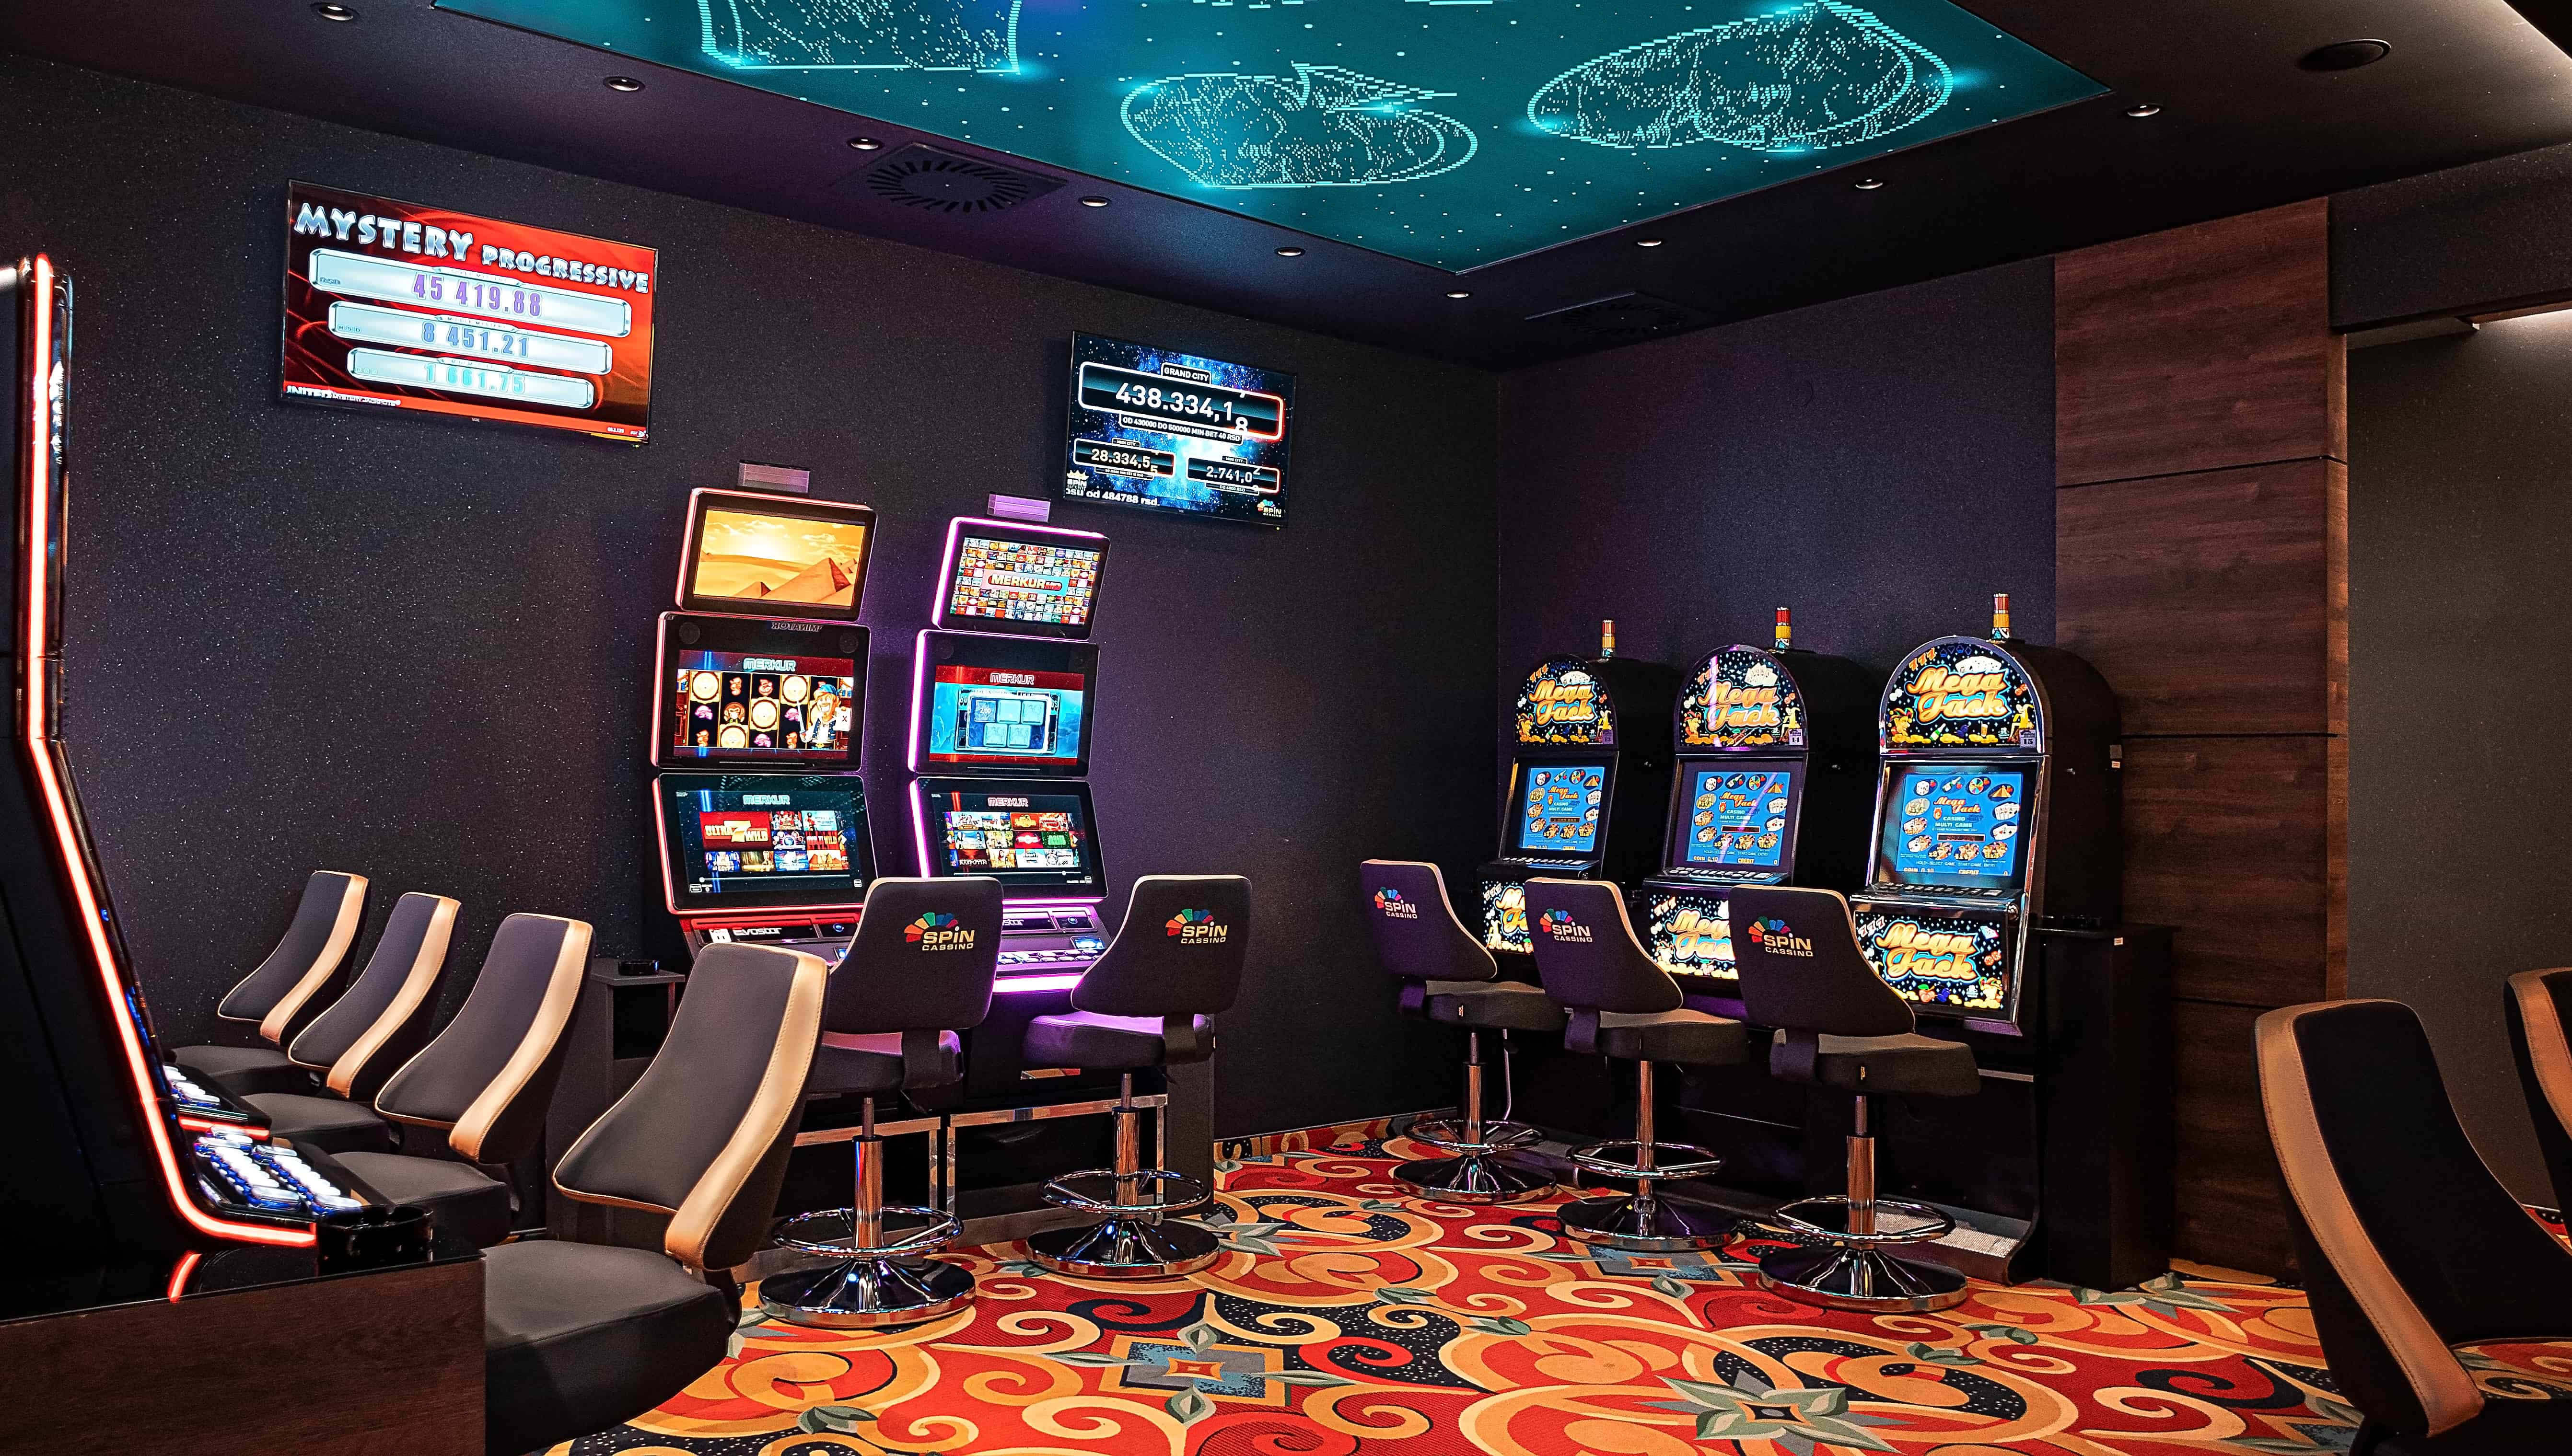 U ovom Spin klubu u ulici DIMITRIJA TUCOVIĆA 5 možete pronaći Gaminator (Novomatic), Premier-Collection (EGT), Mega Jack (Casino Technology) Apex slot aparate.